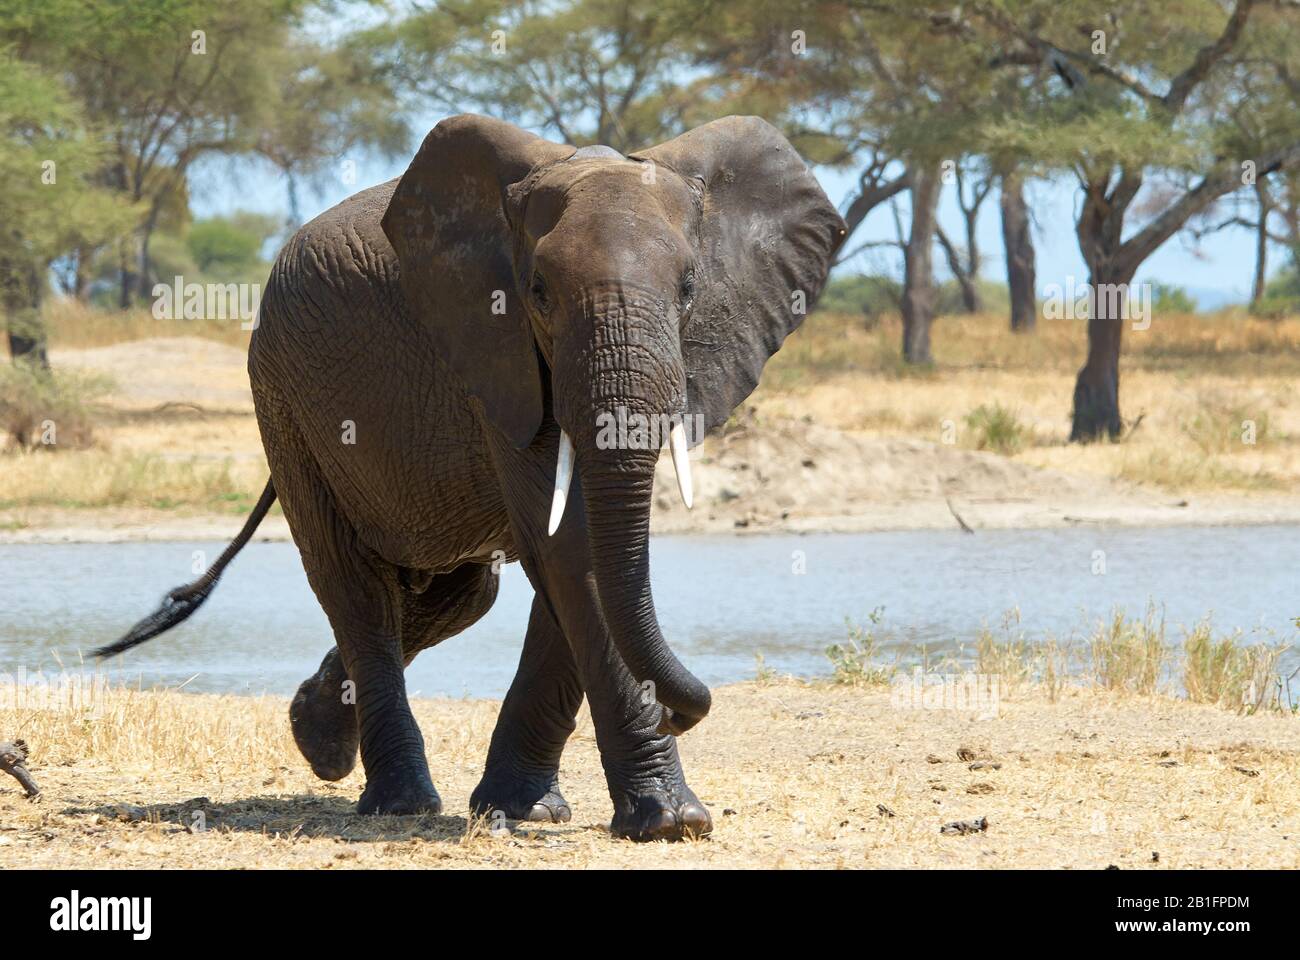 An elephant matriarch walking by Stock Photo